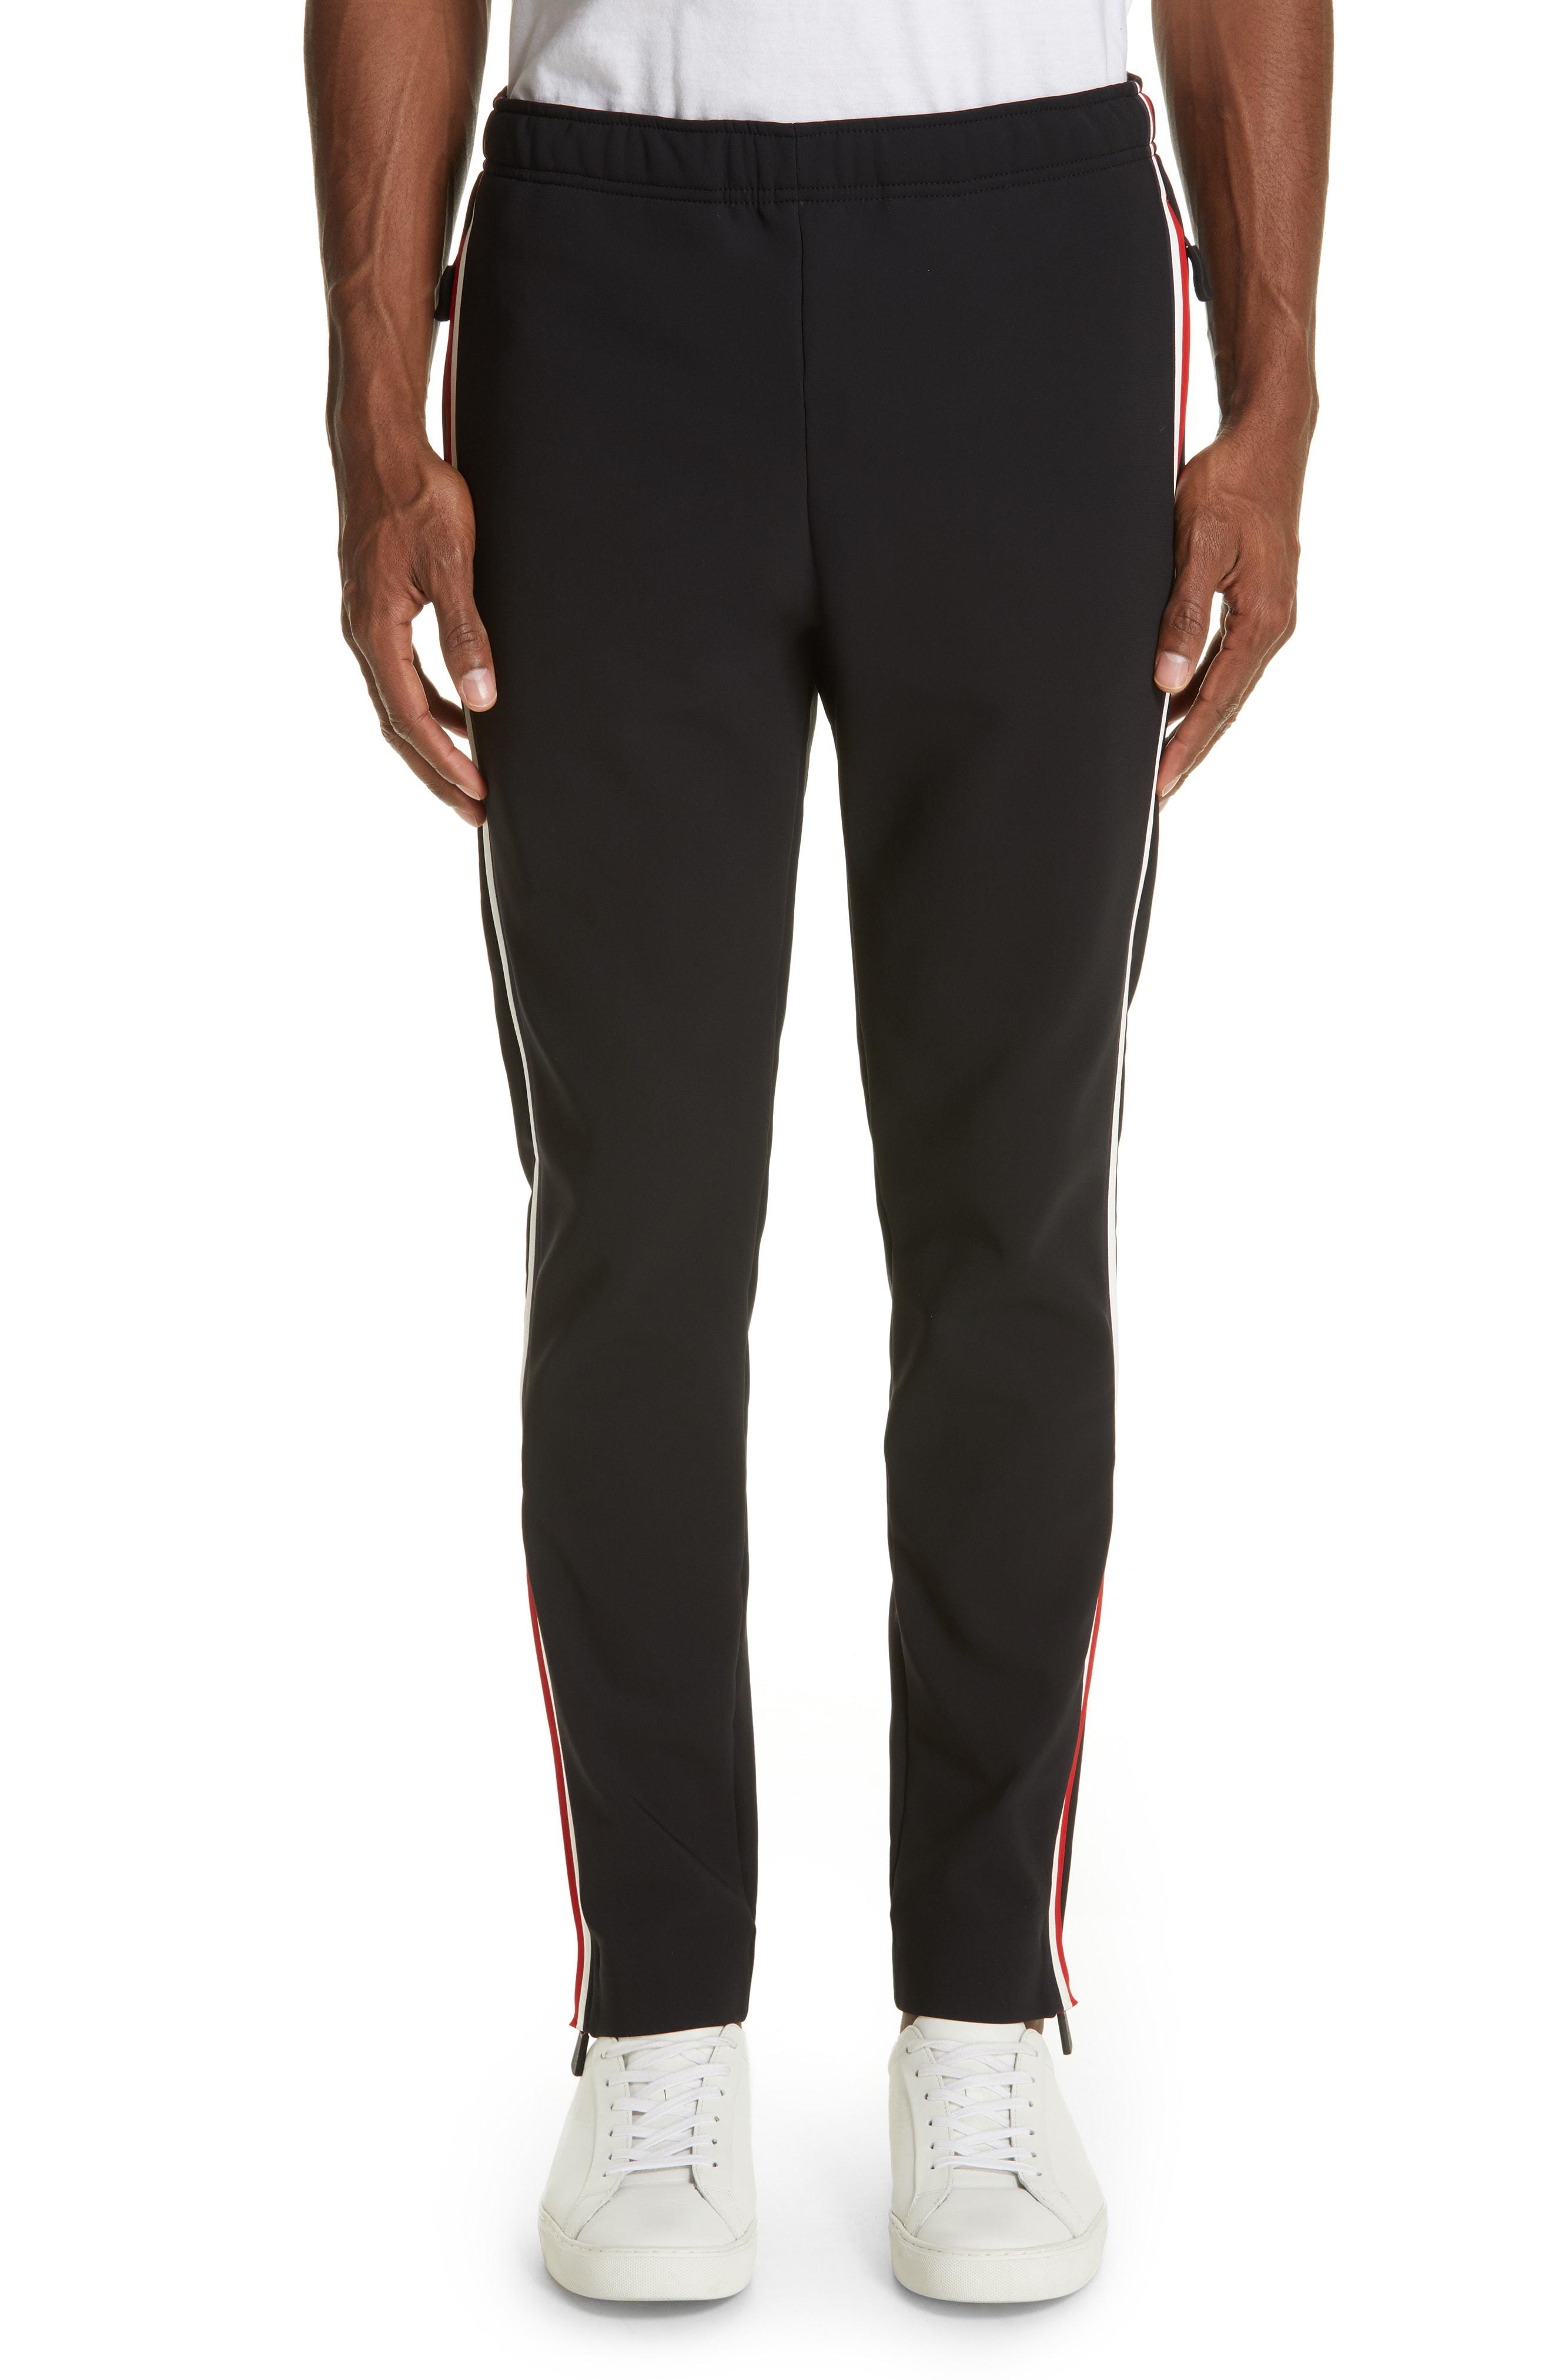 Lyst - Moncler Pantalone Side Stripe Track Pants in Black for Men